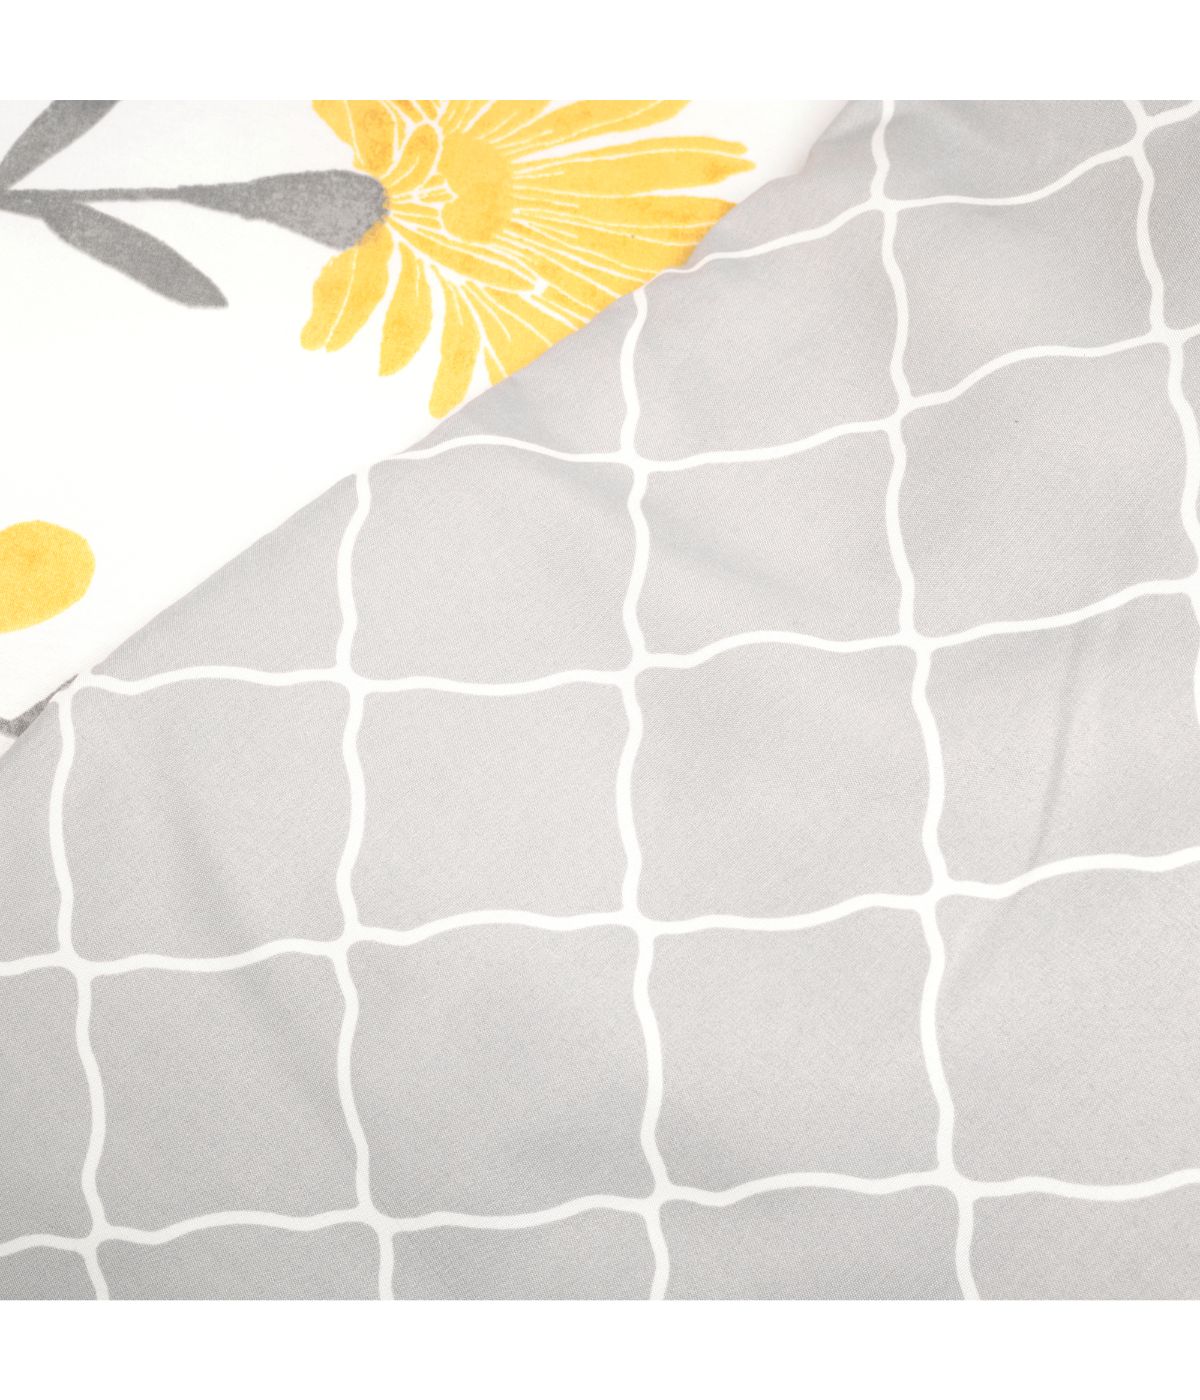 Aprile Soft Reversible Oversized 8 Piece Comforter Set Yellow/Gray